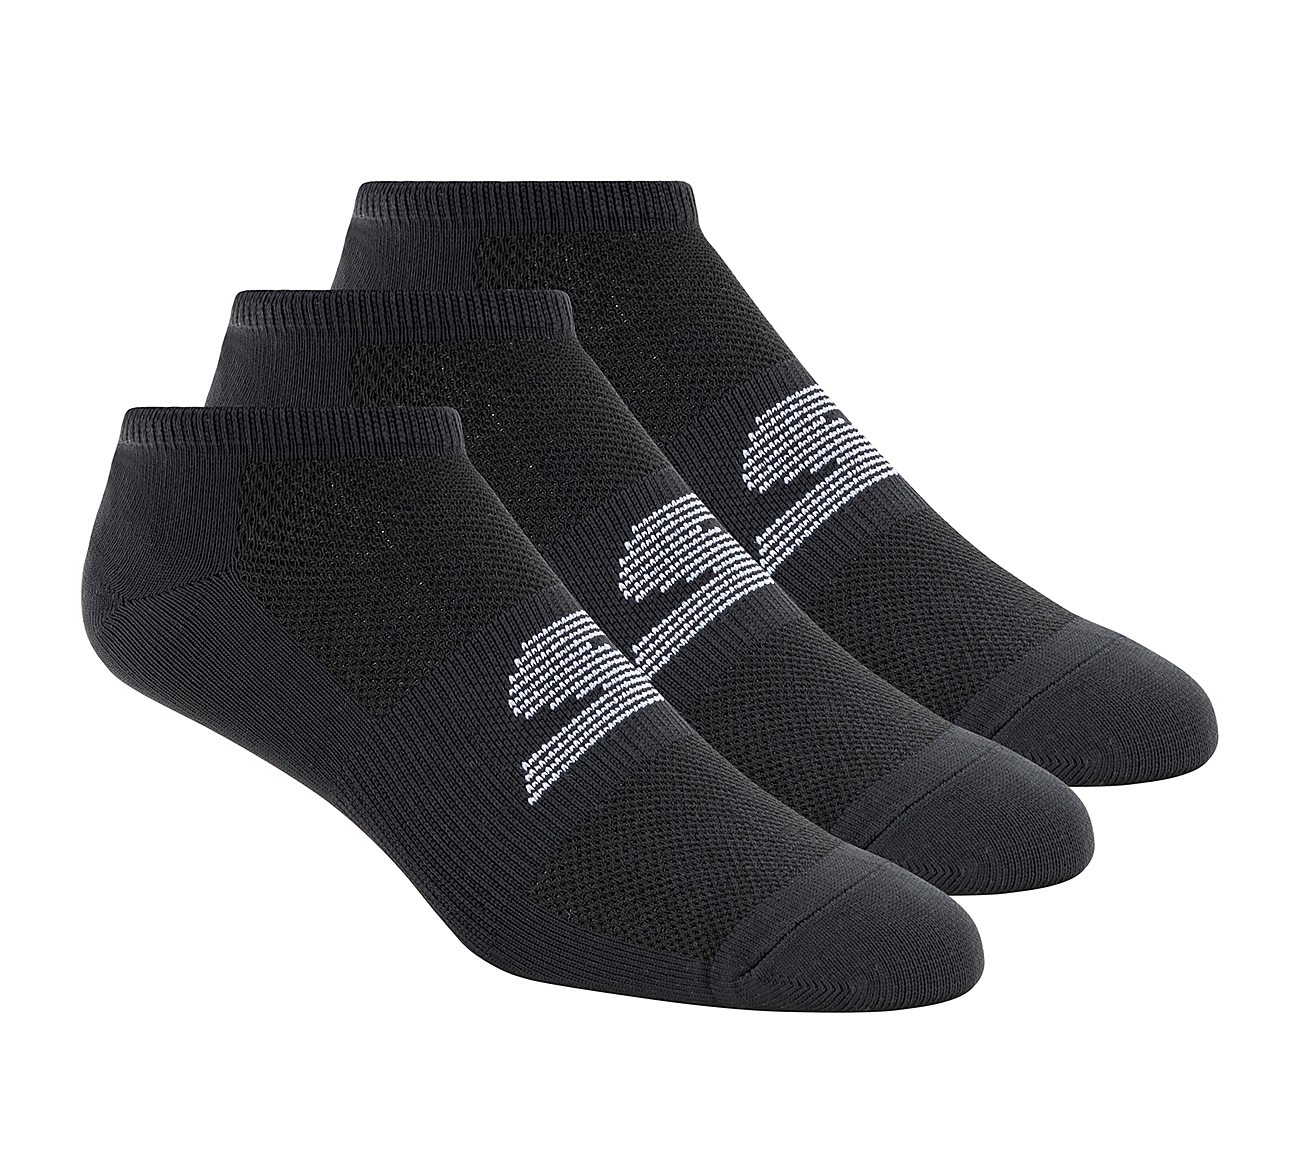 skechers socks online